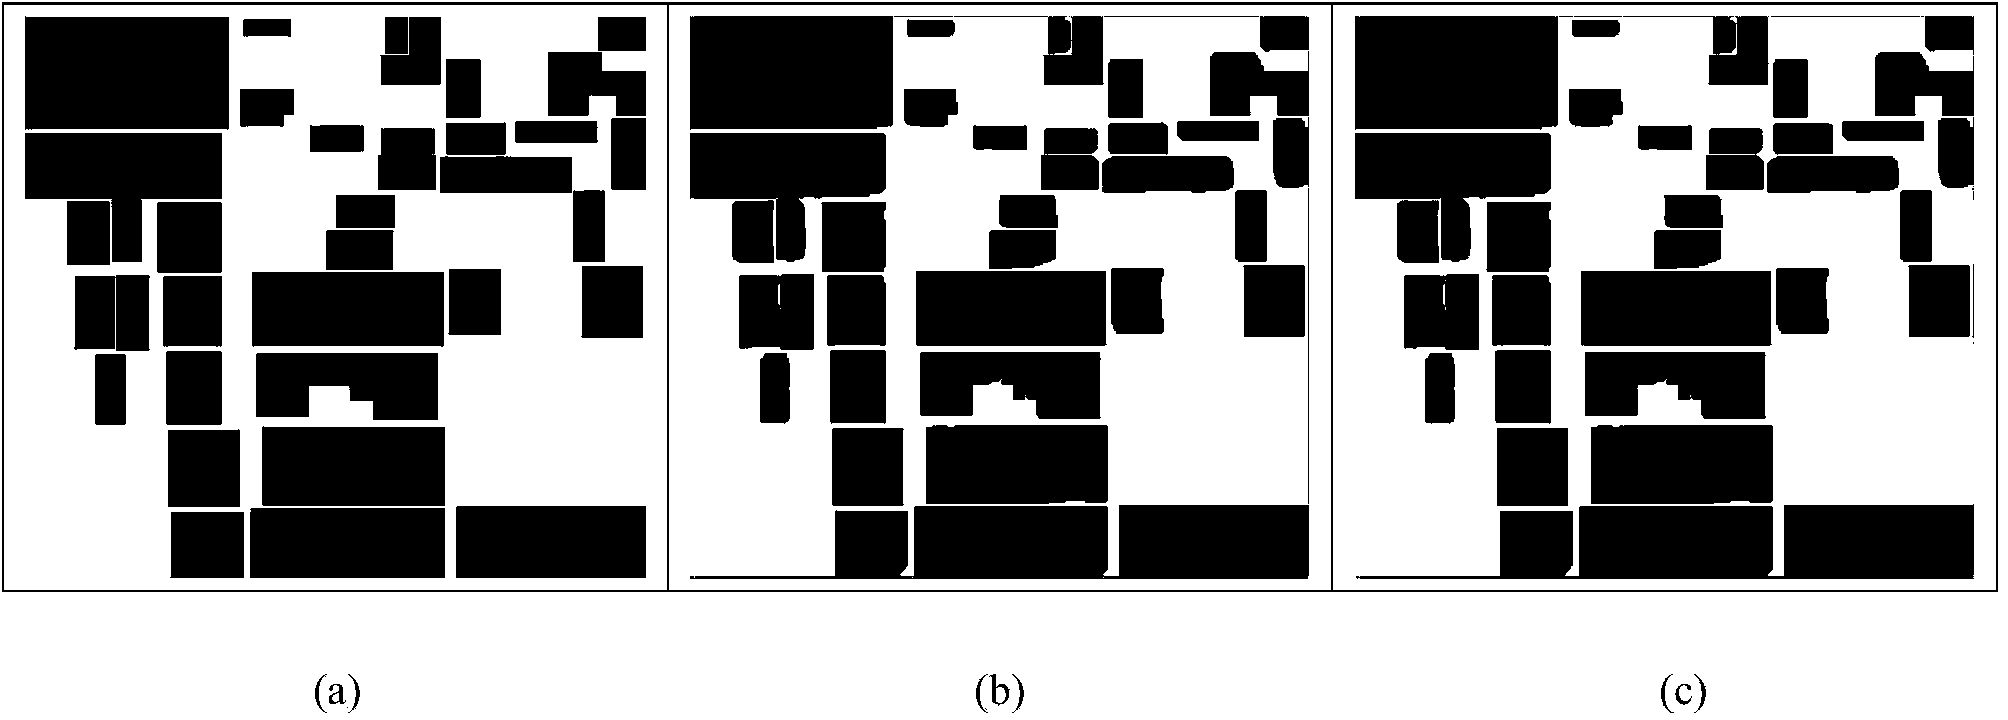 Polarization SAR image classification method based on deep neural network